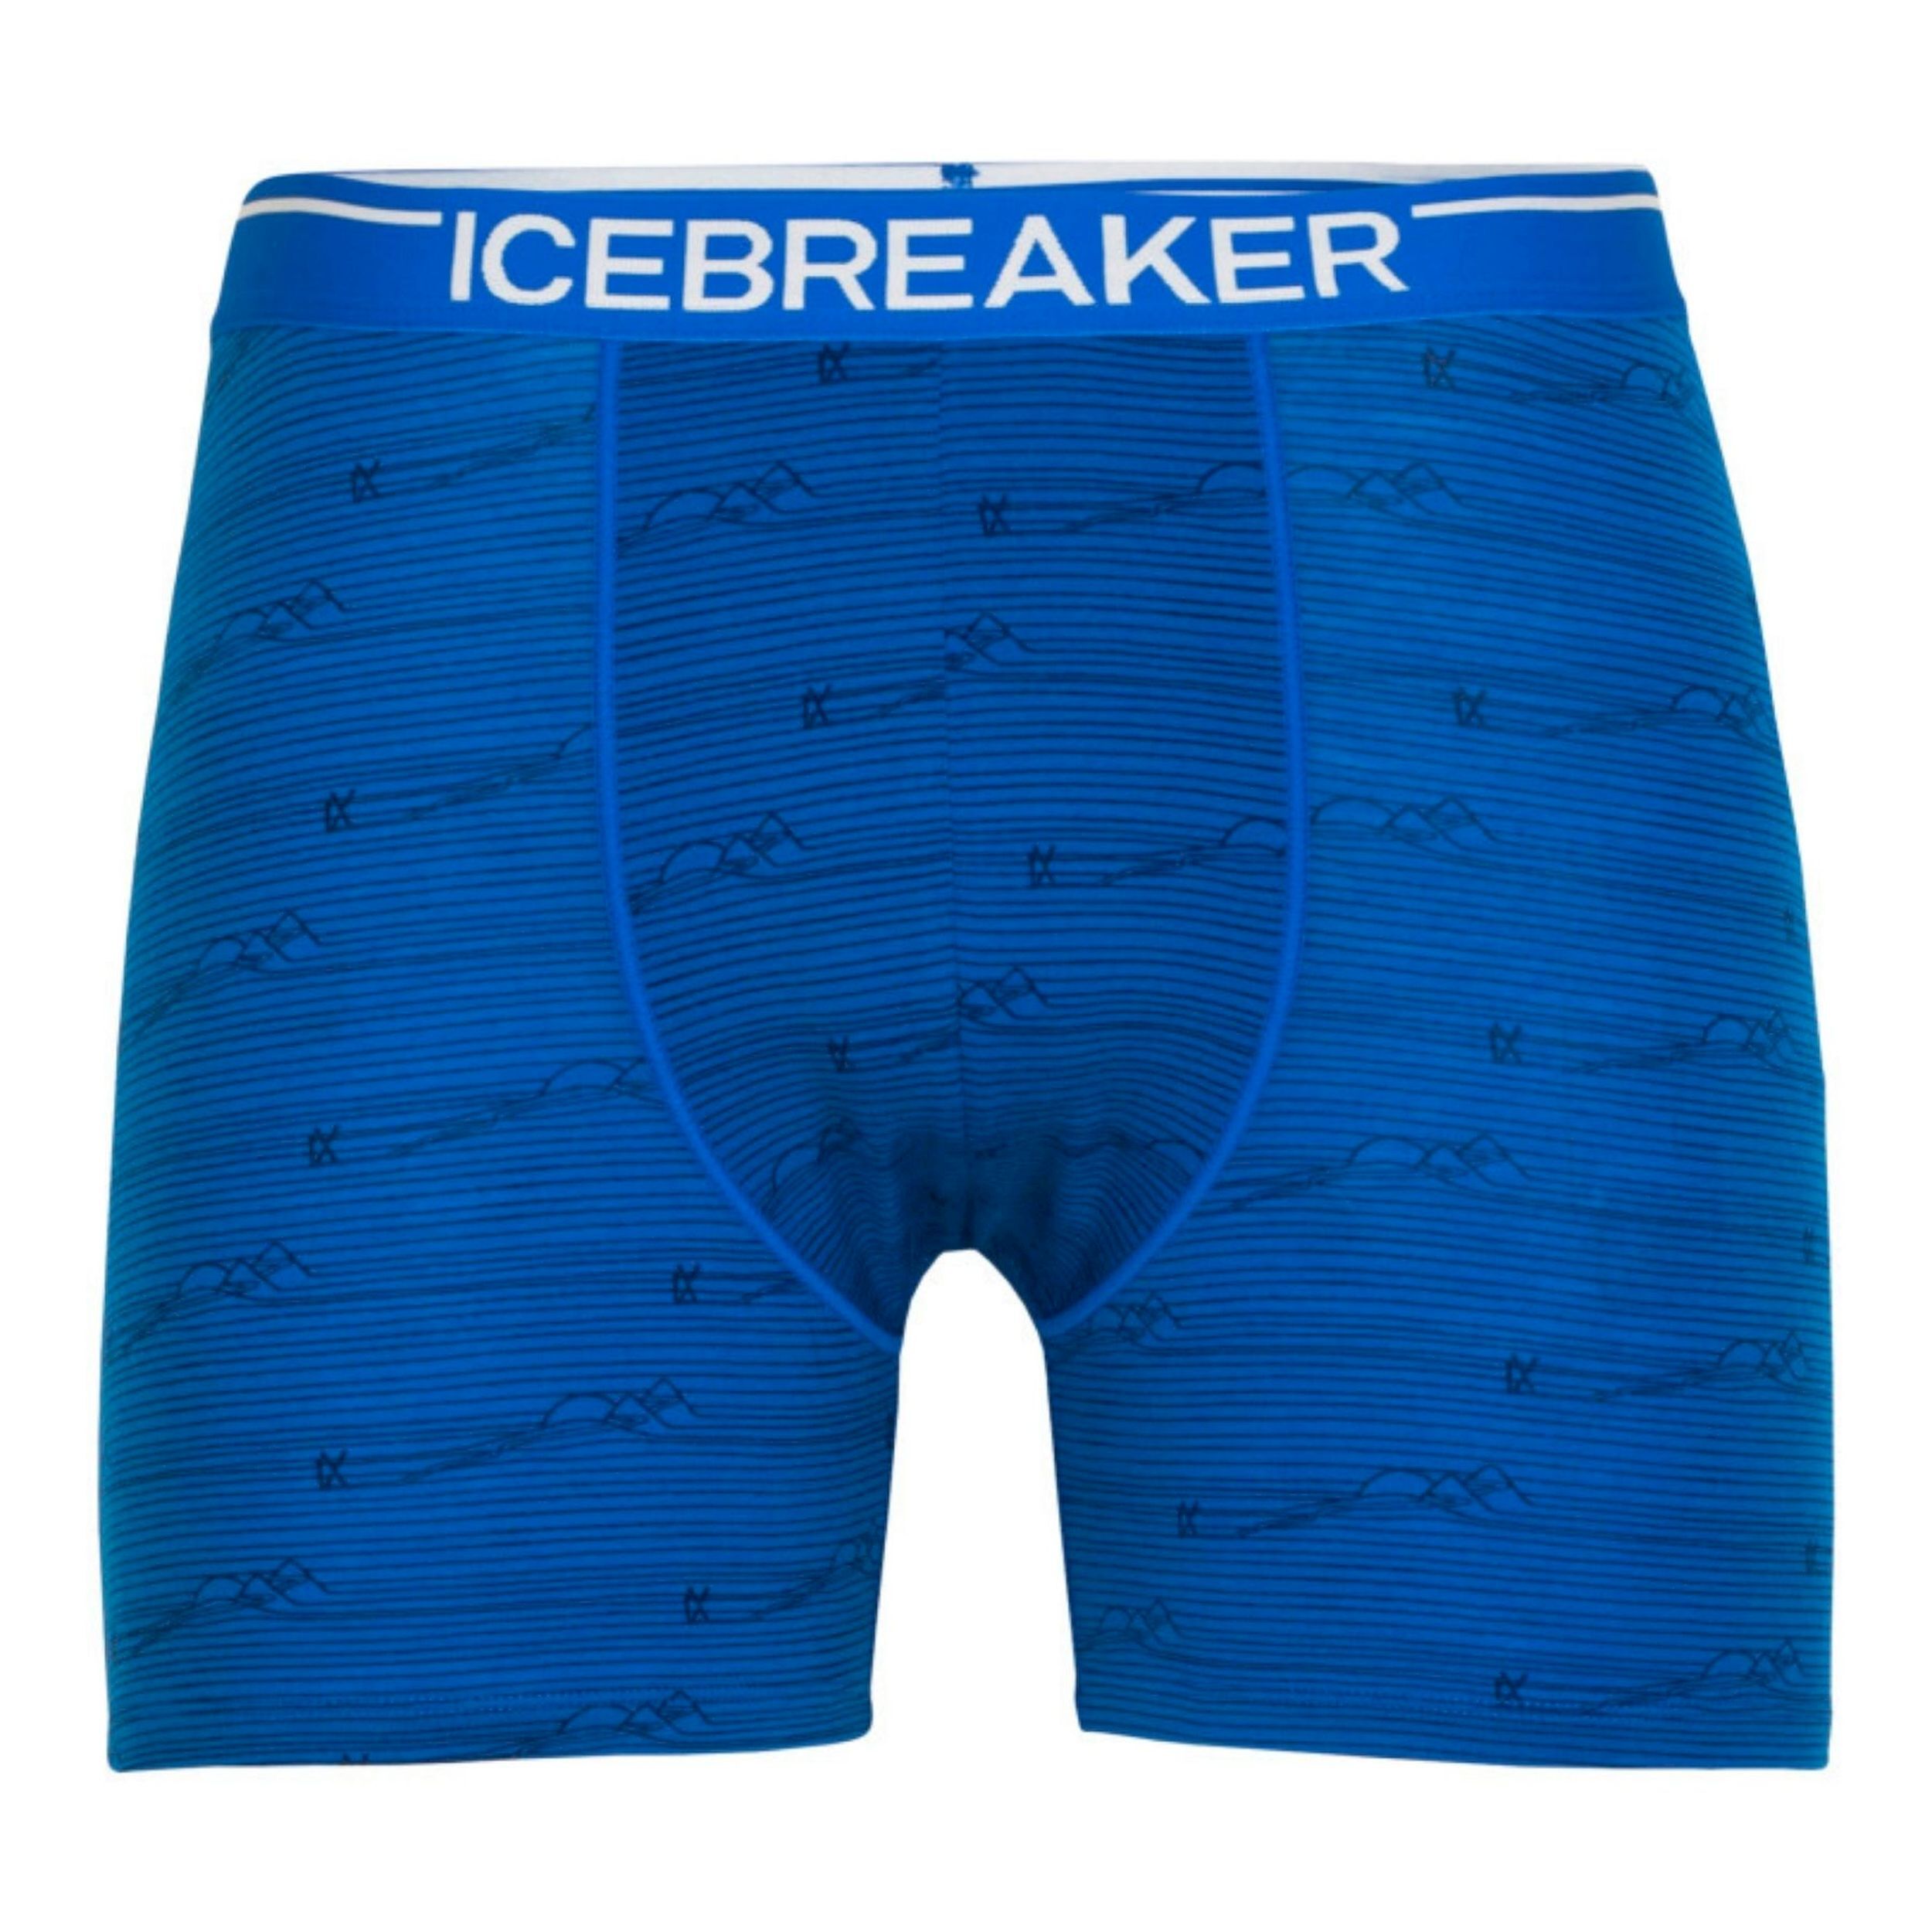 Icebreaker Boxers - Ropa - Hombre